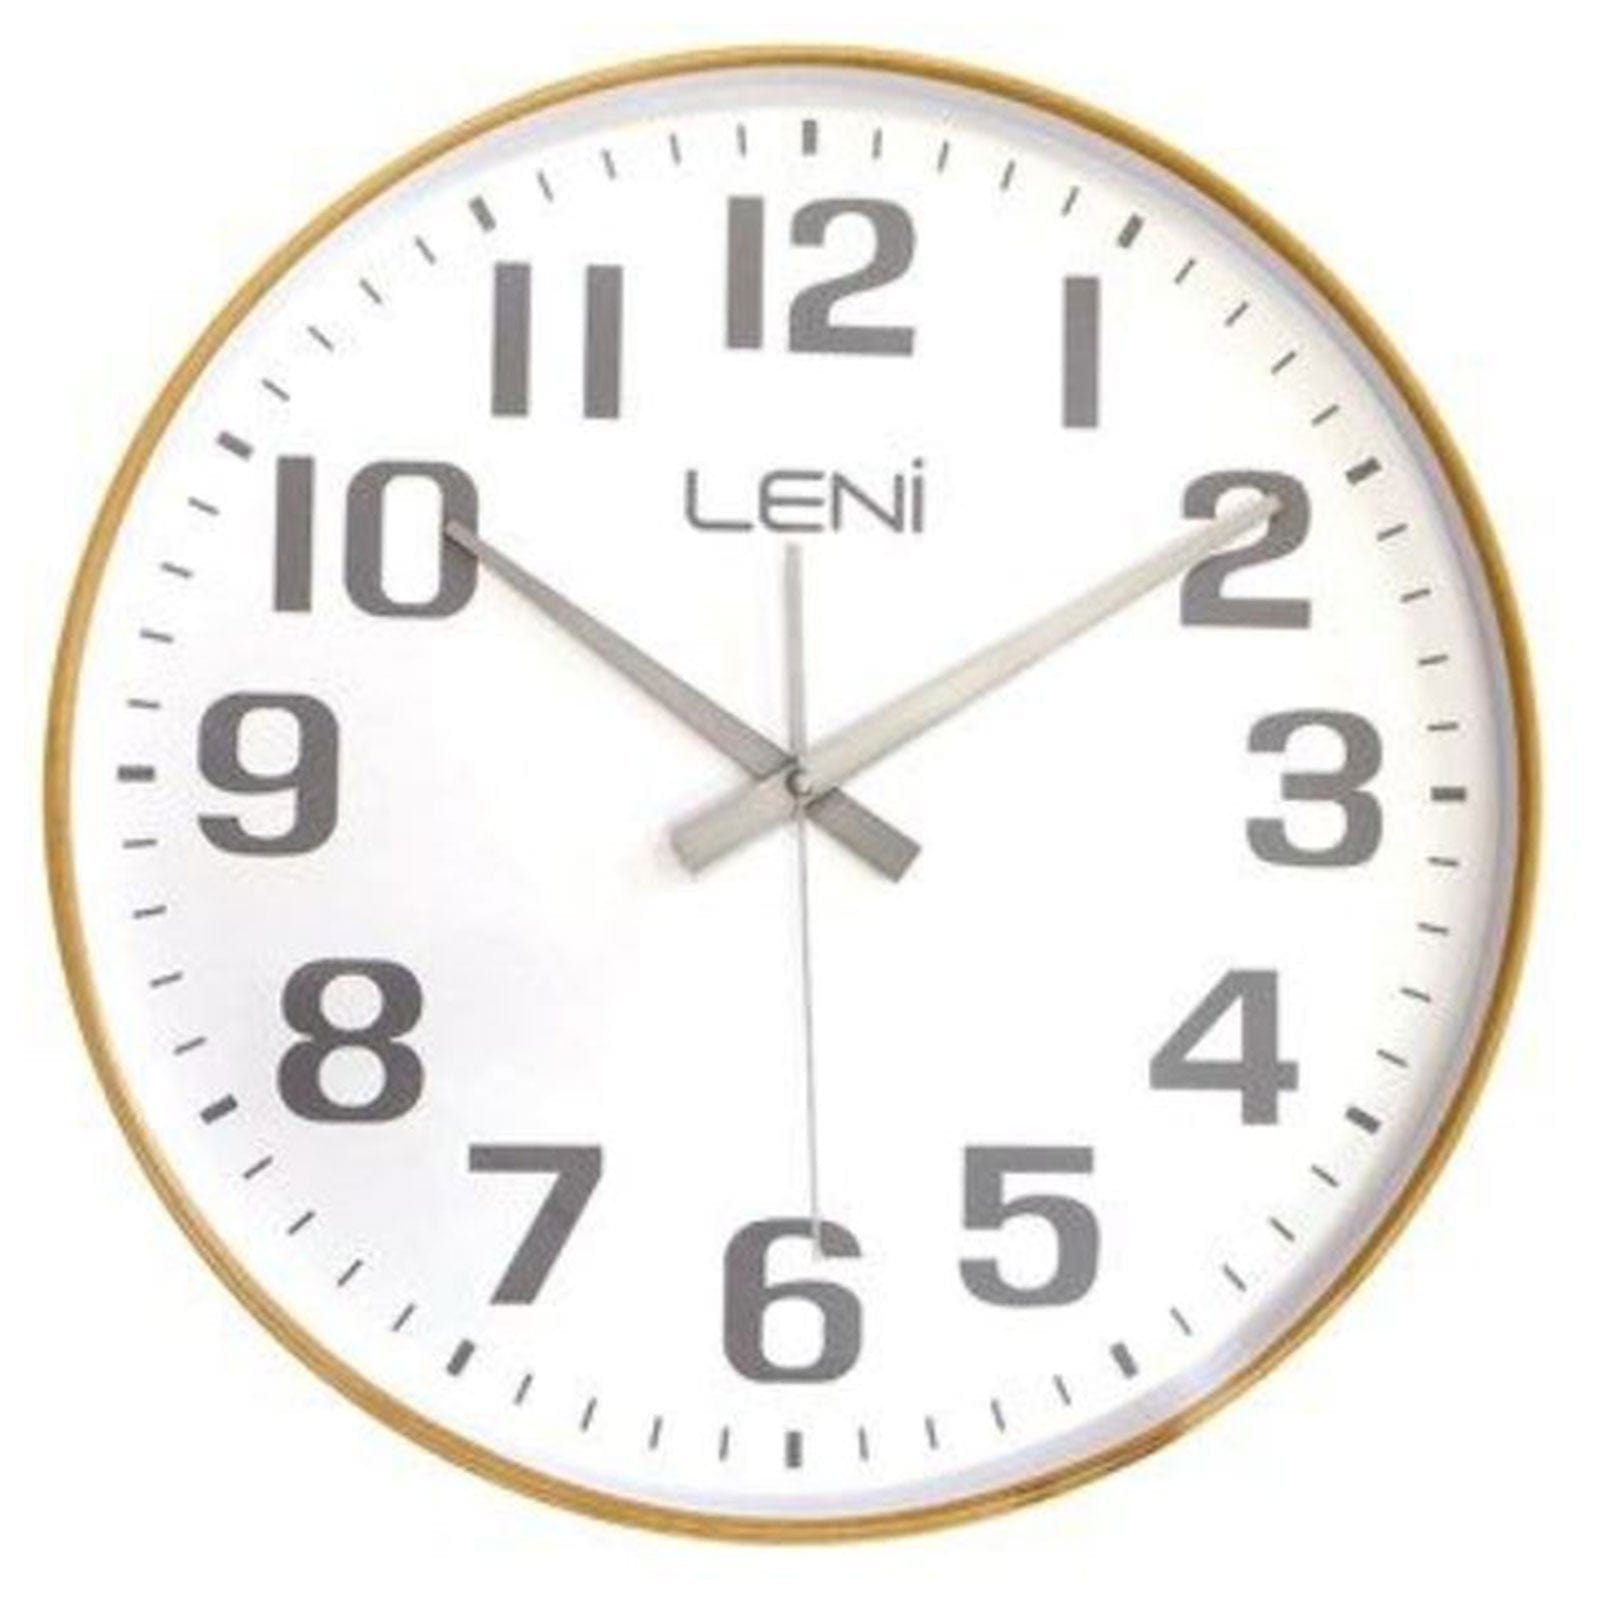 40cm Leni Wood Wall Clock - White.